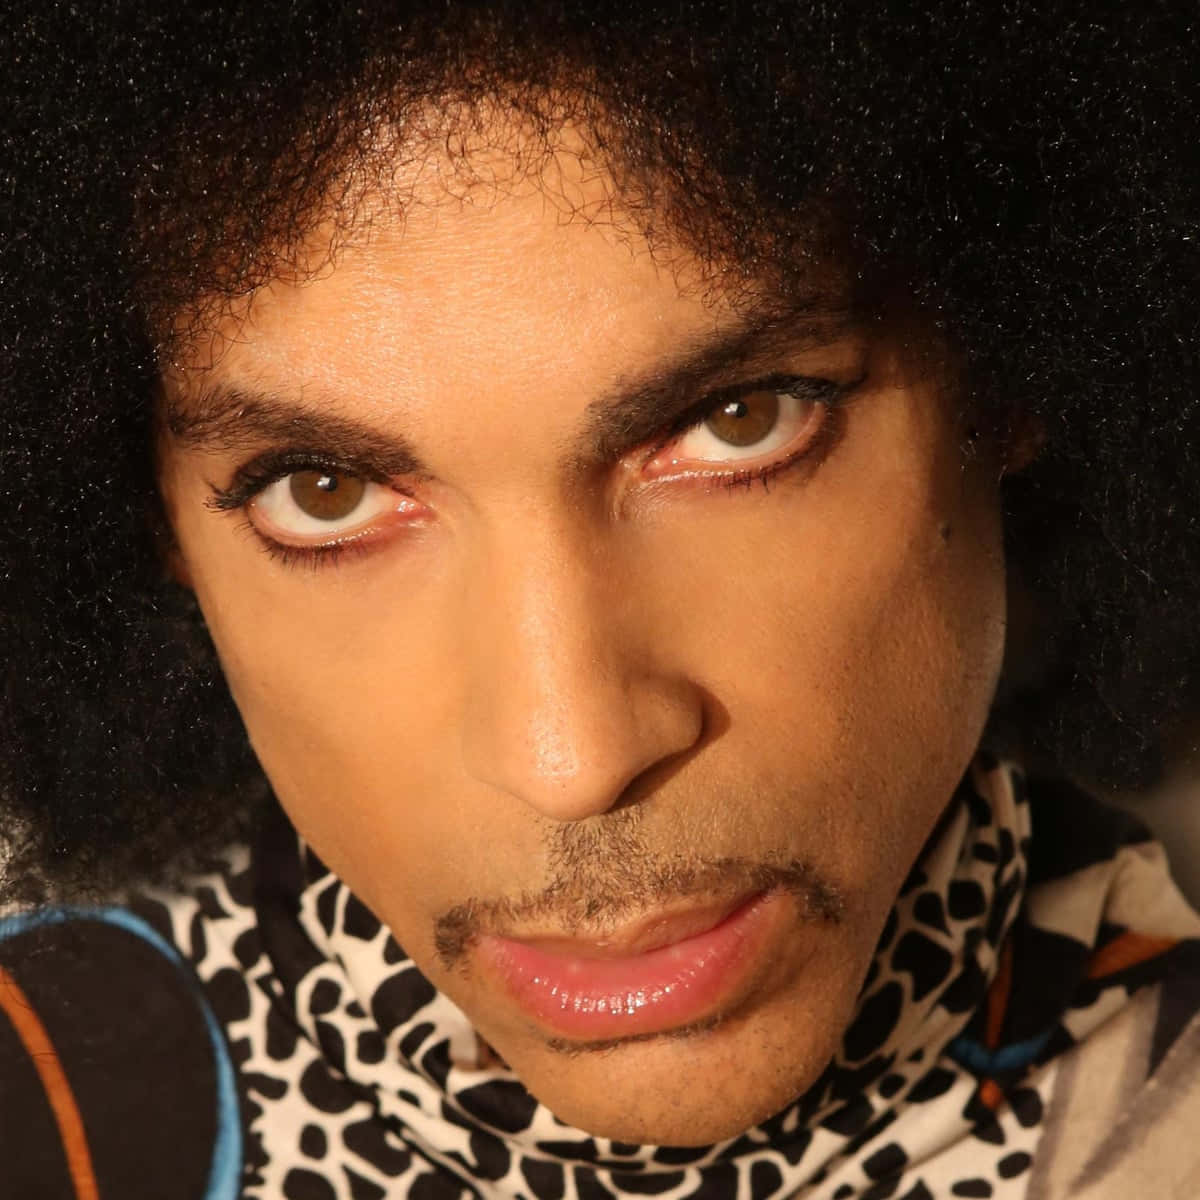 Prince, the legendary artist and innovator